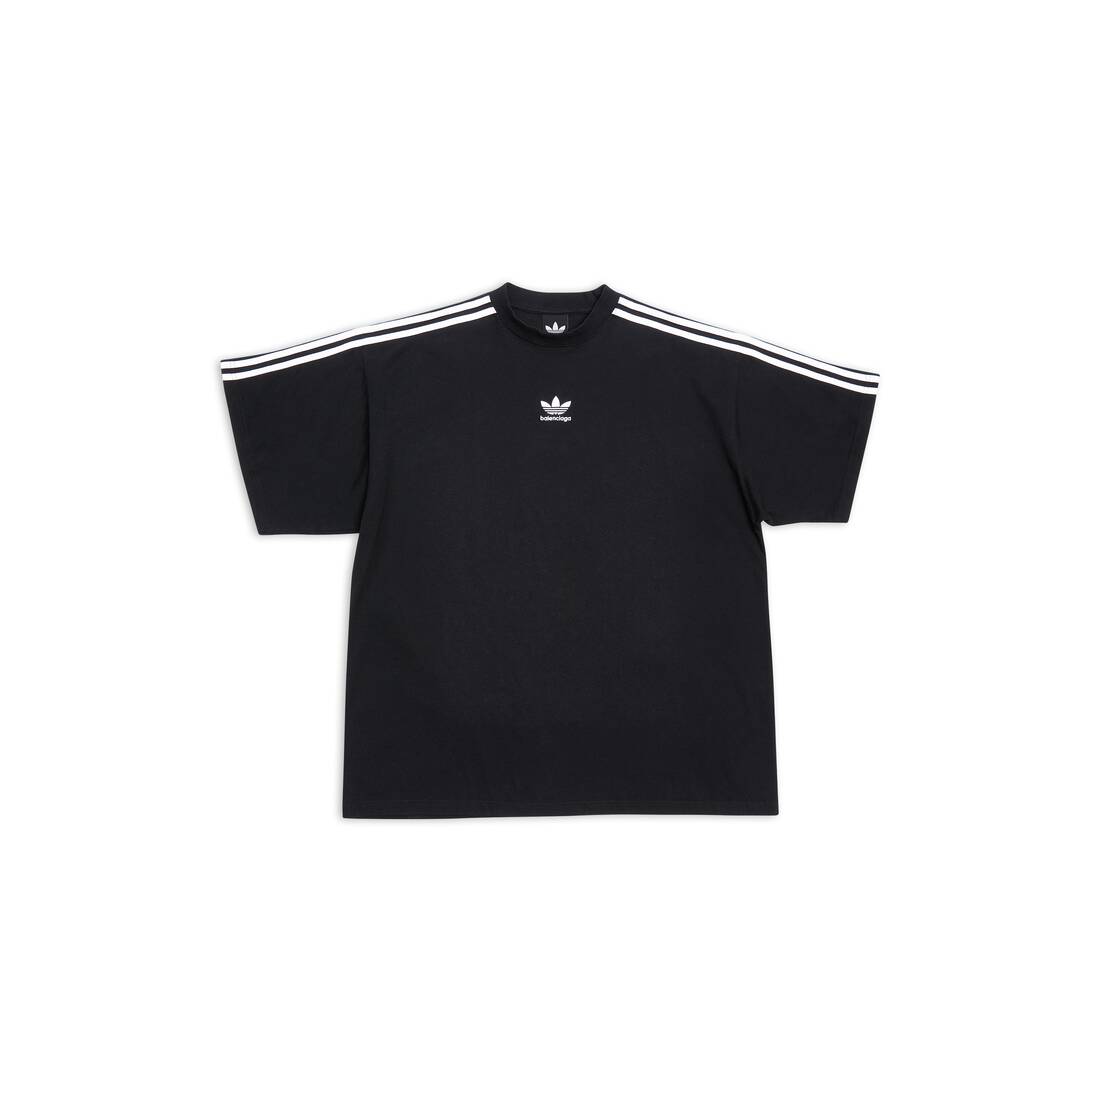 Balenciaga / Adidas T-shirt Oversized in Black